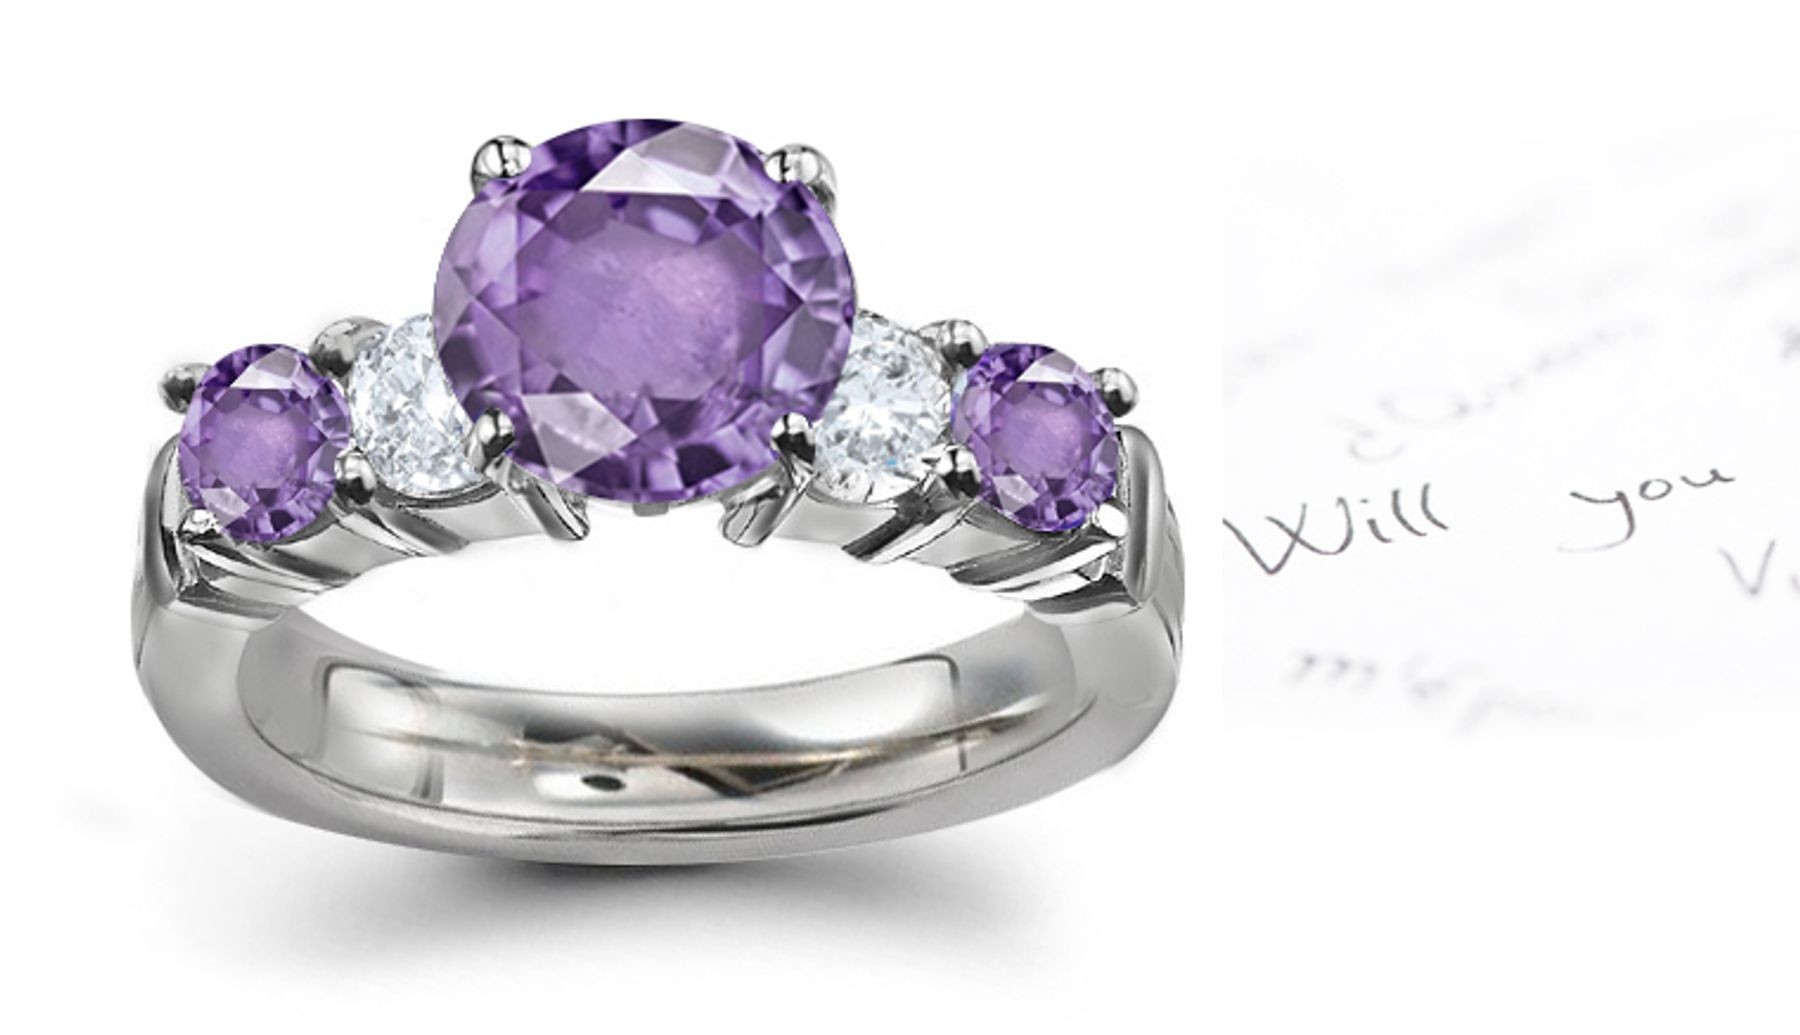 Purple Sapphire & White Diamond Ring